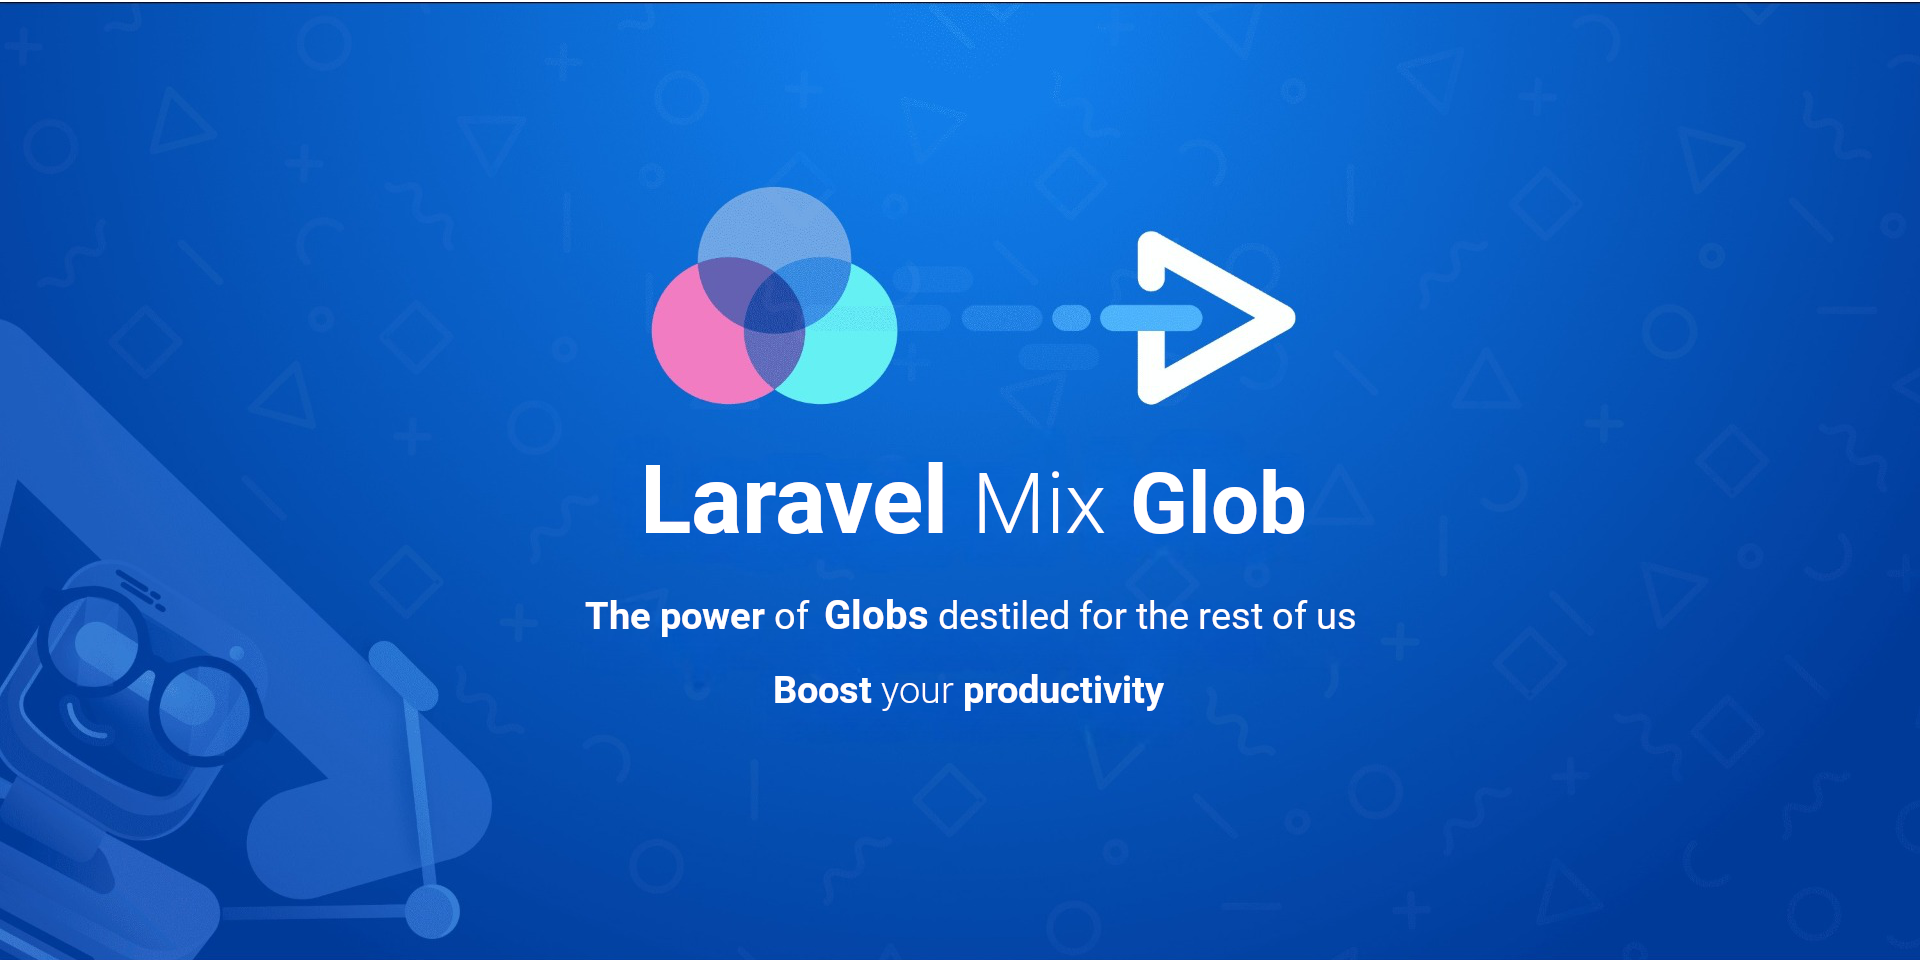 laravel_mix_glob_banner.png